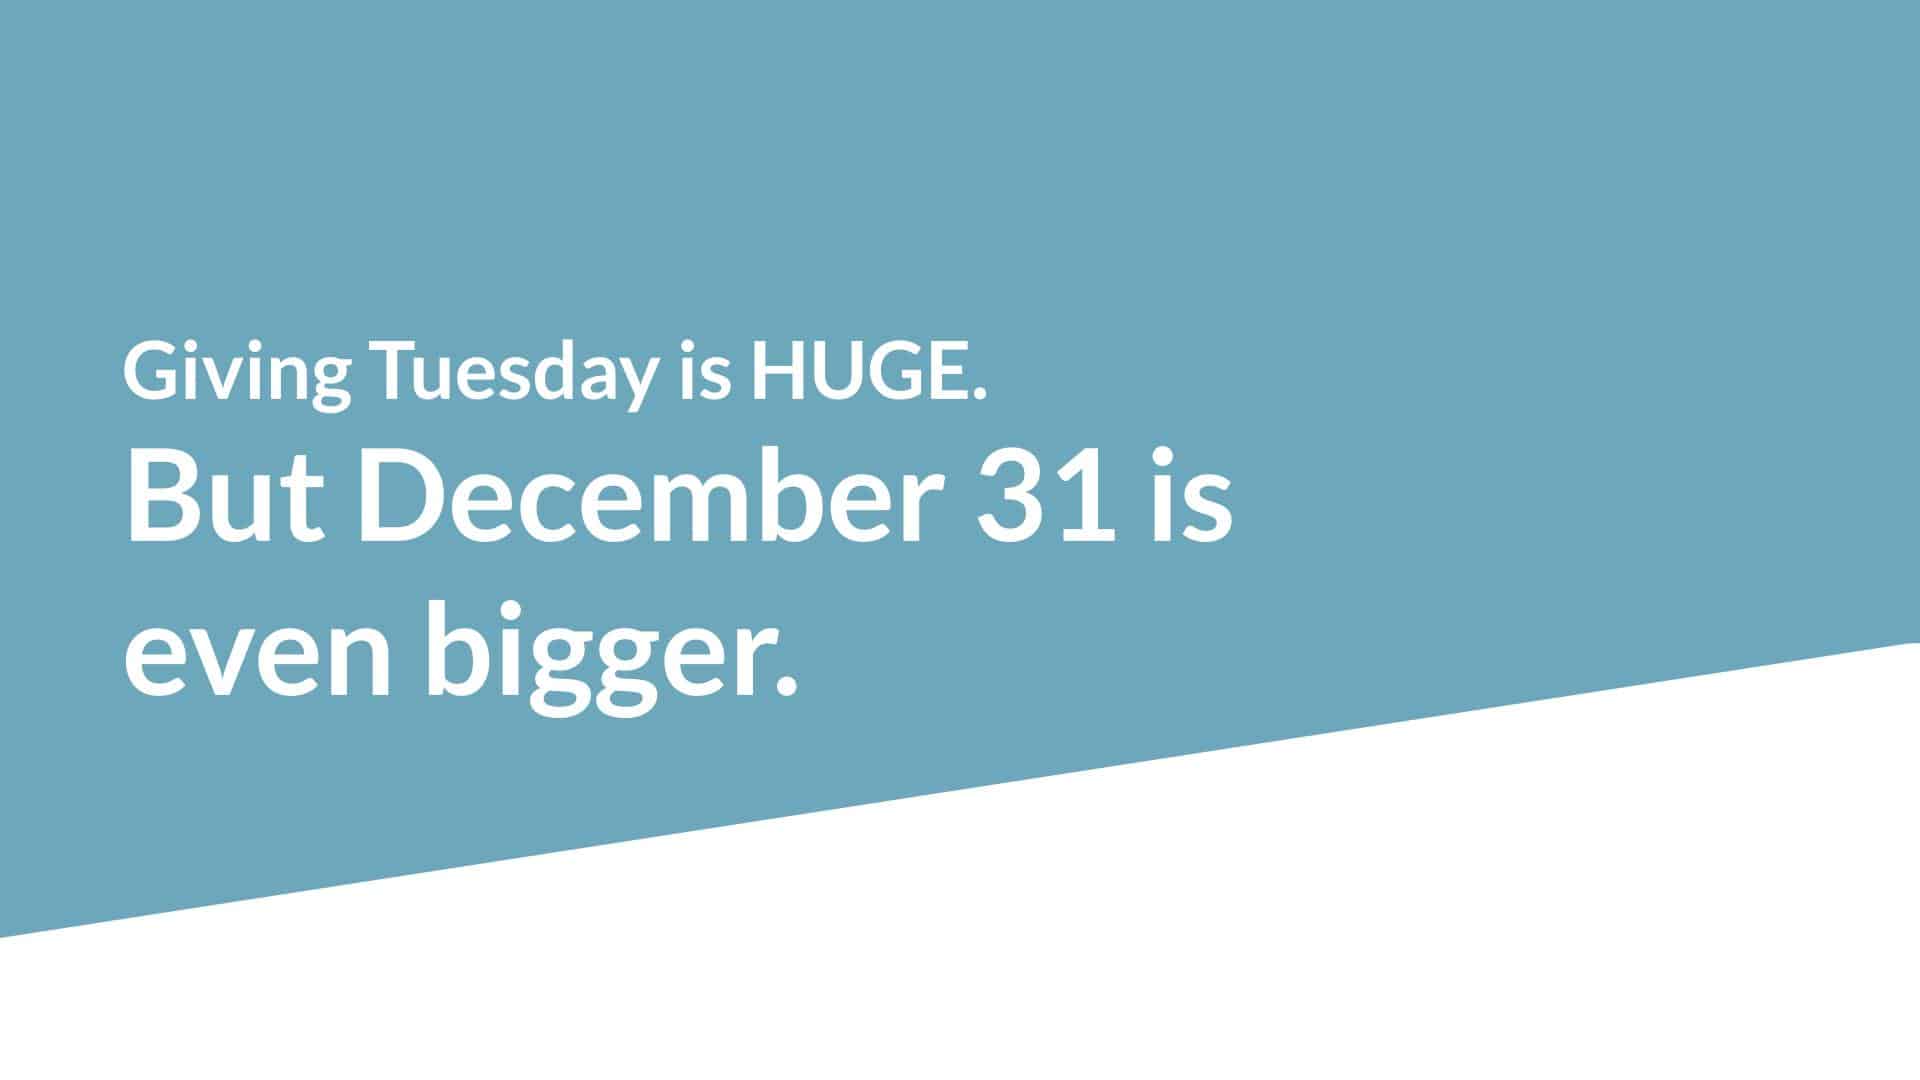 Slide 4: Giving Tuesday is huge, but December 31 is bigger.